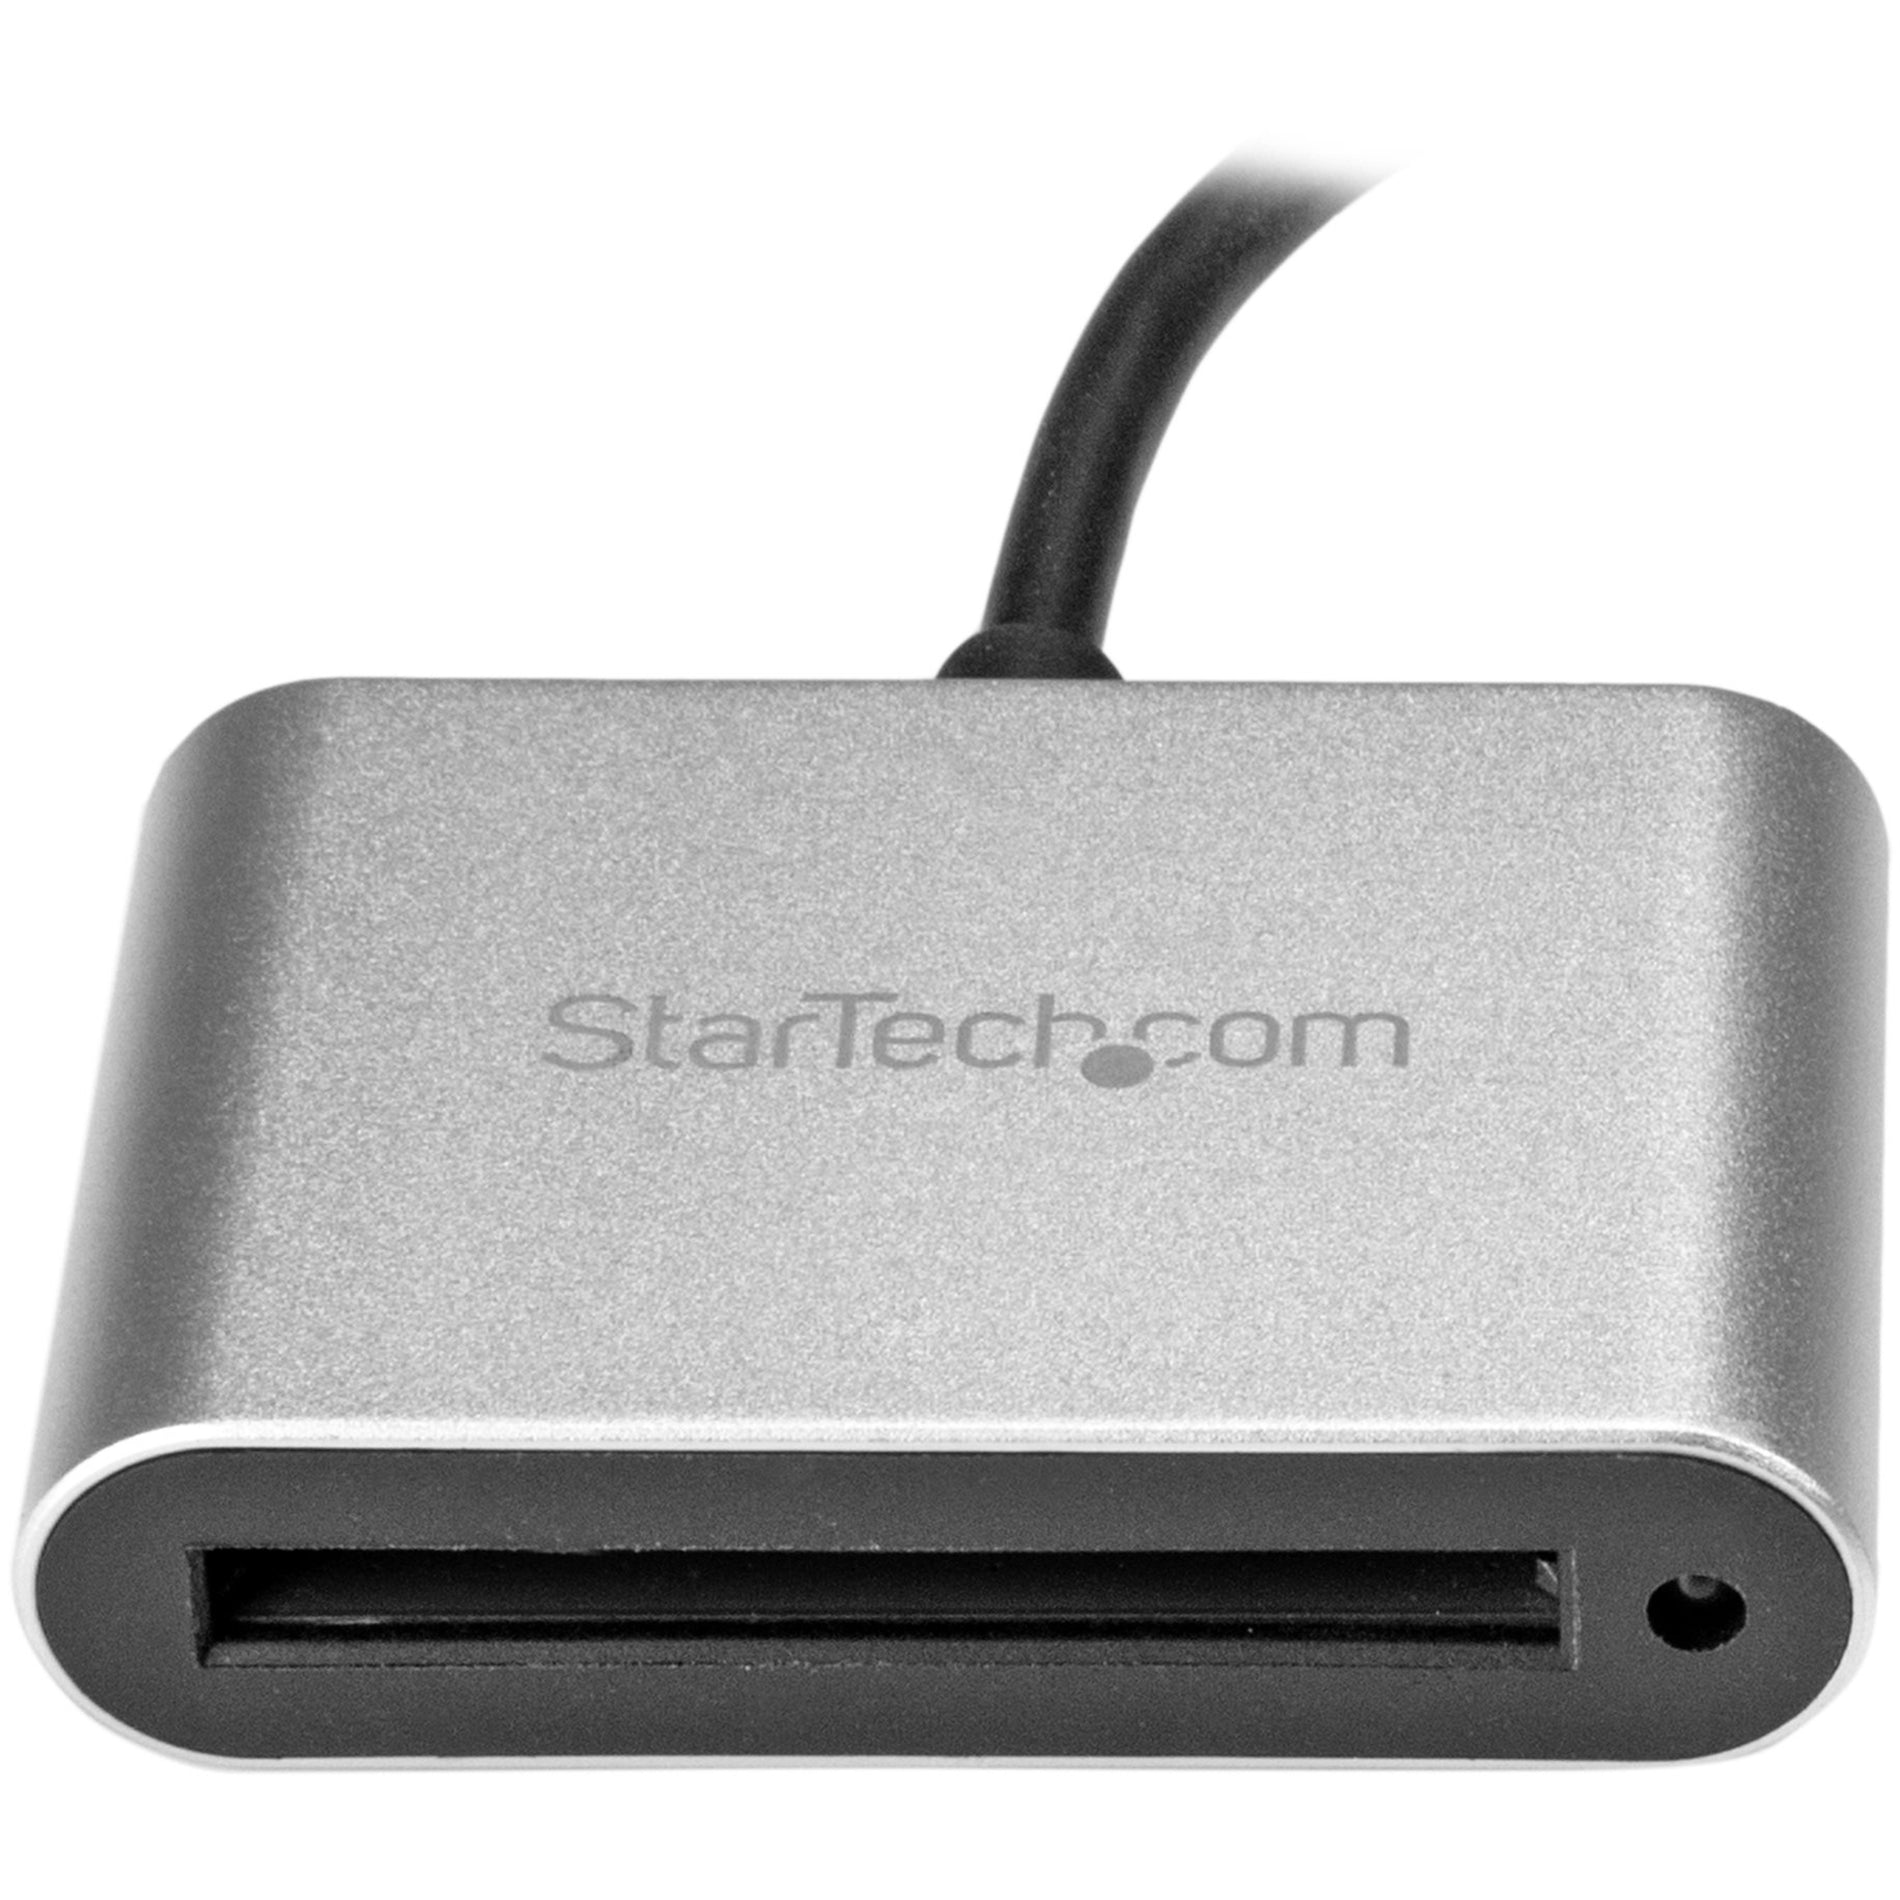 StarTech.com CFASTRWU3C Flash Reader, USB-C 3.0 CFast 2.0 Card Reader